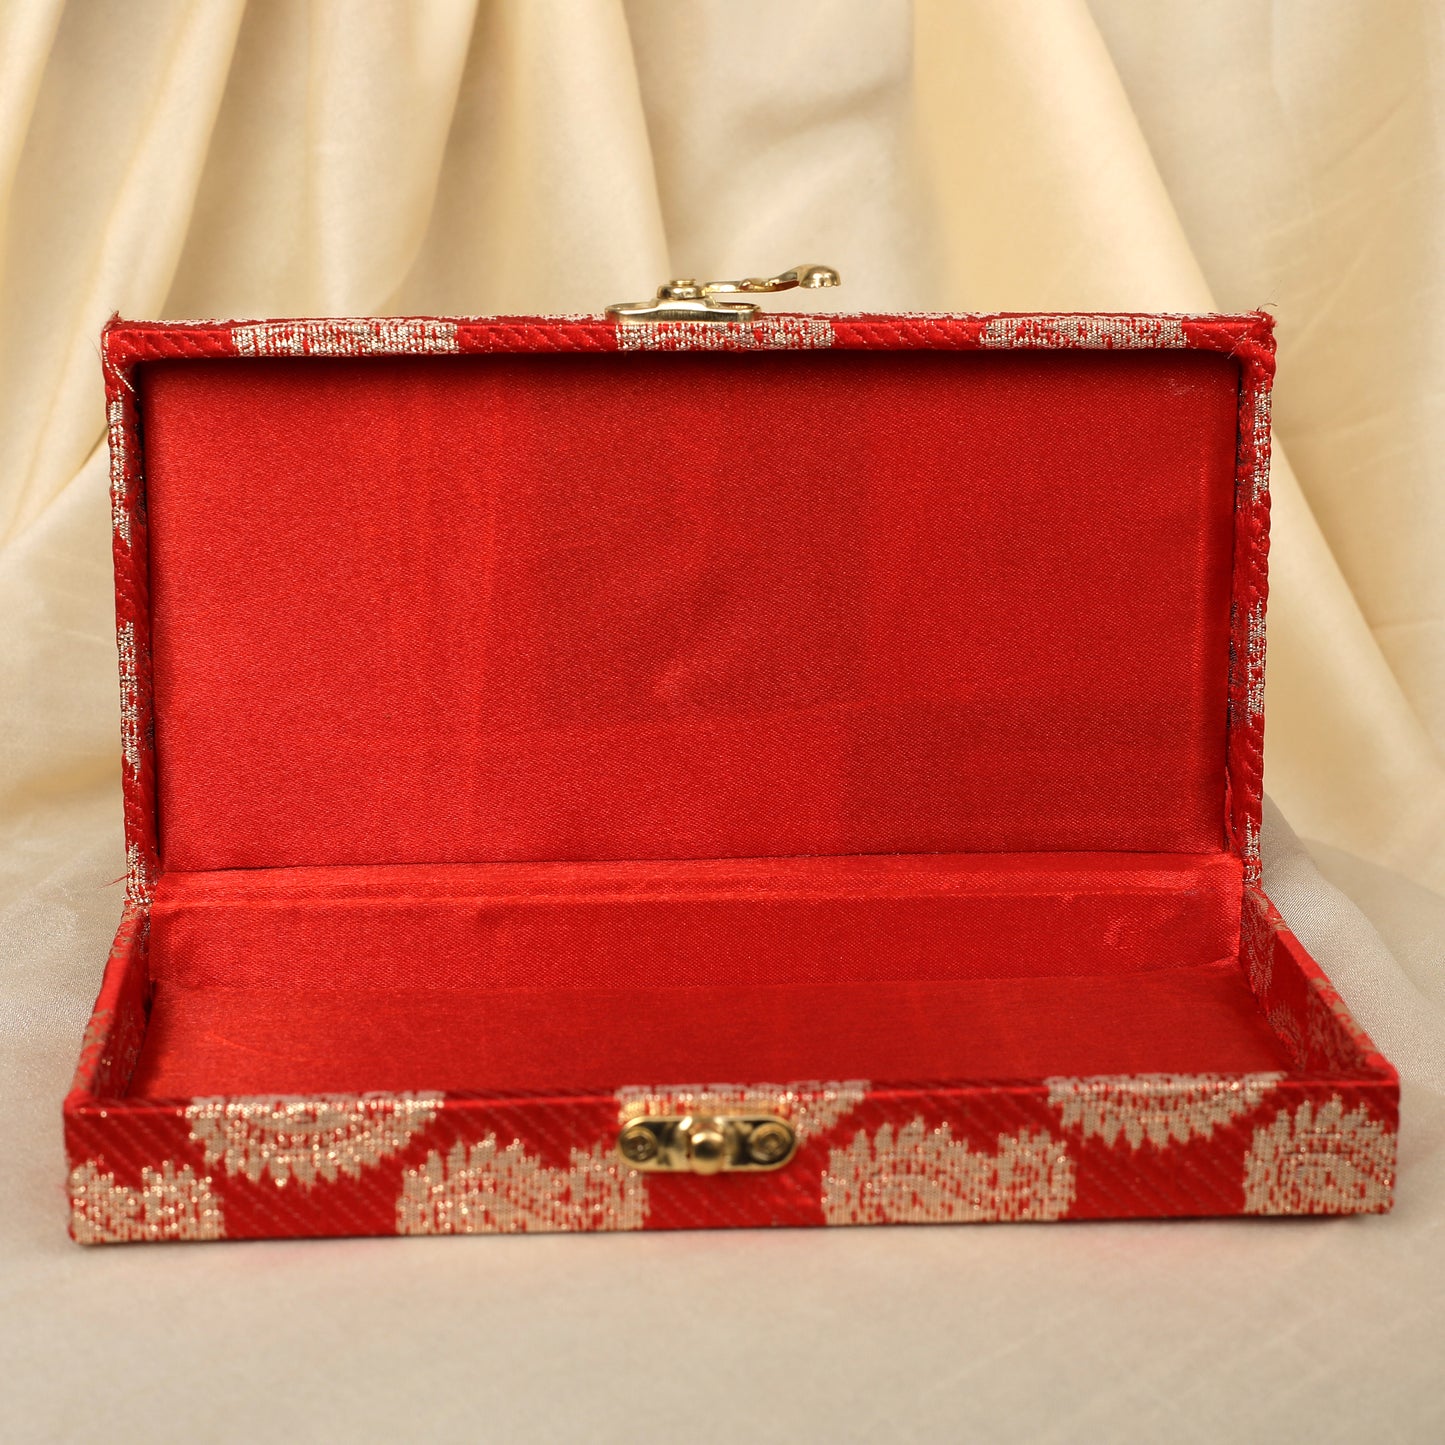 The Red Nayab Cash Box